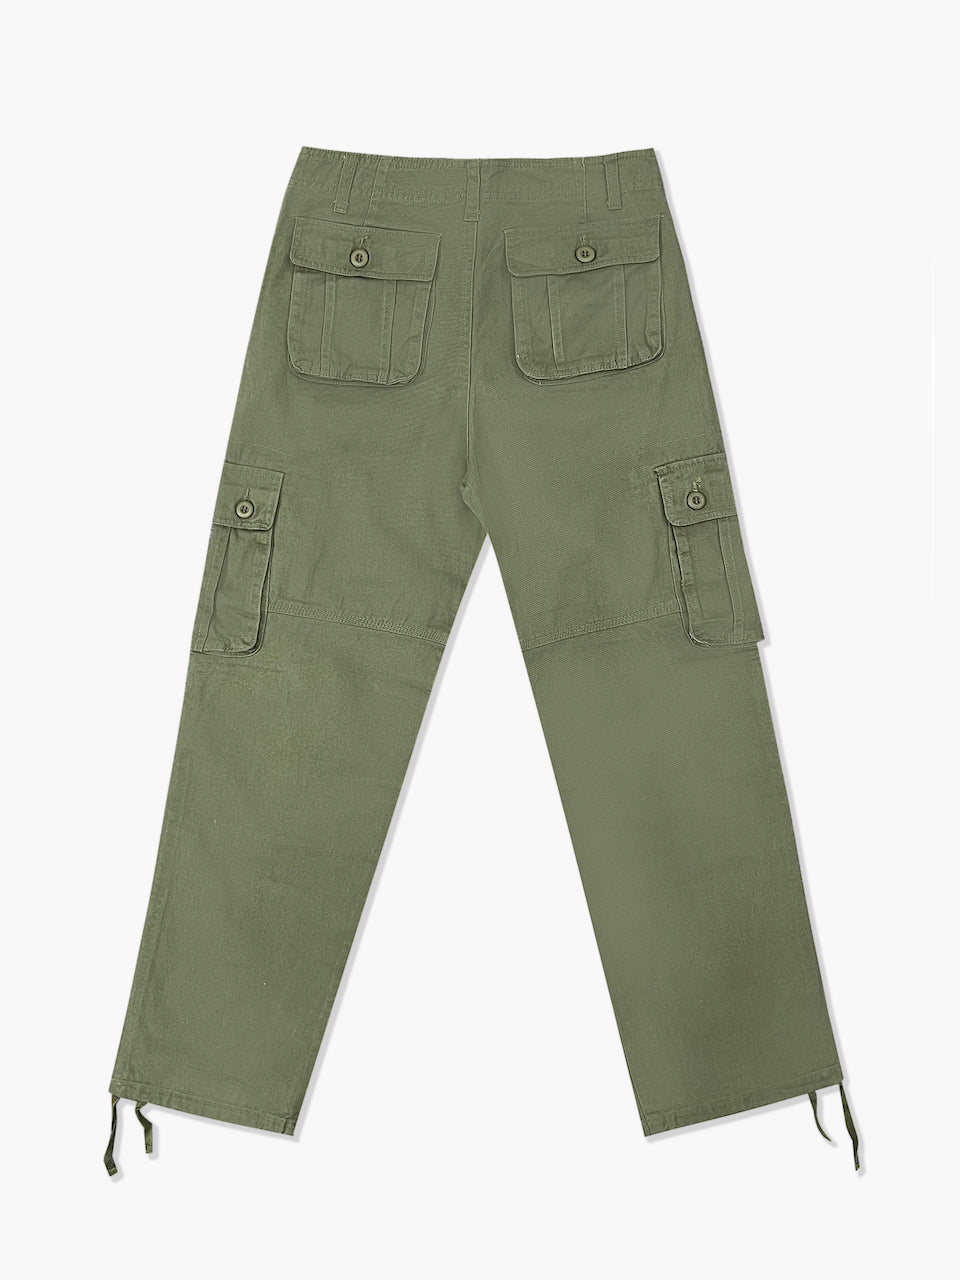 Skechers SKP623 Scrubs Gamma 6-Pocket Elastic Waistband Cargo Pant For Women